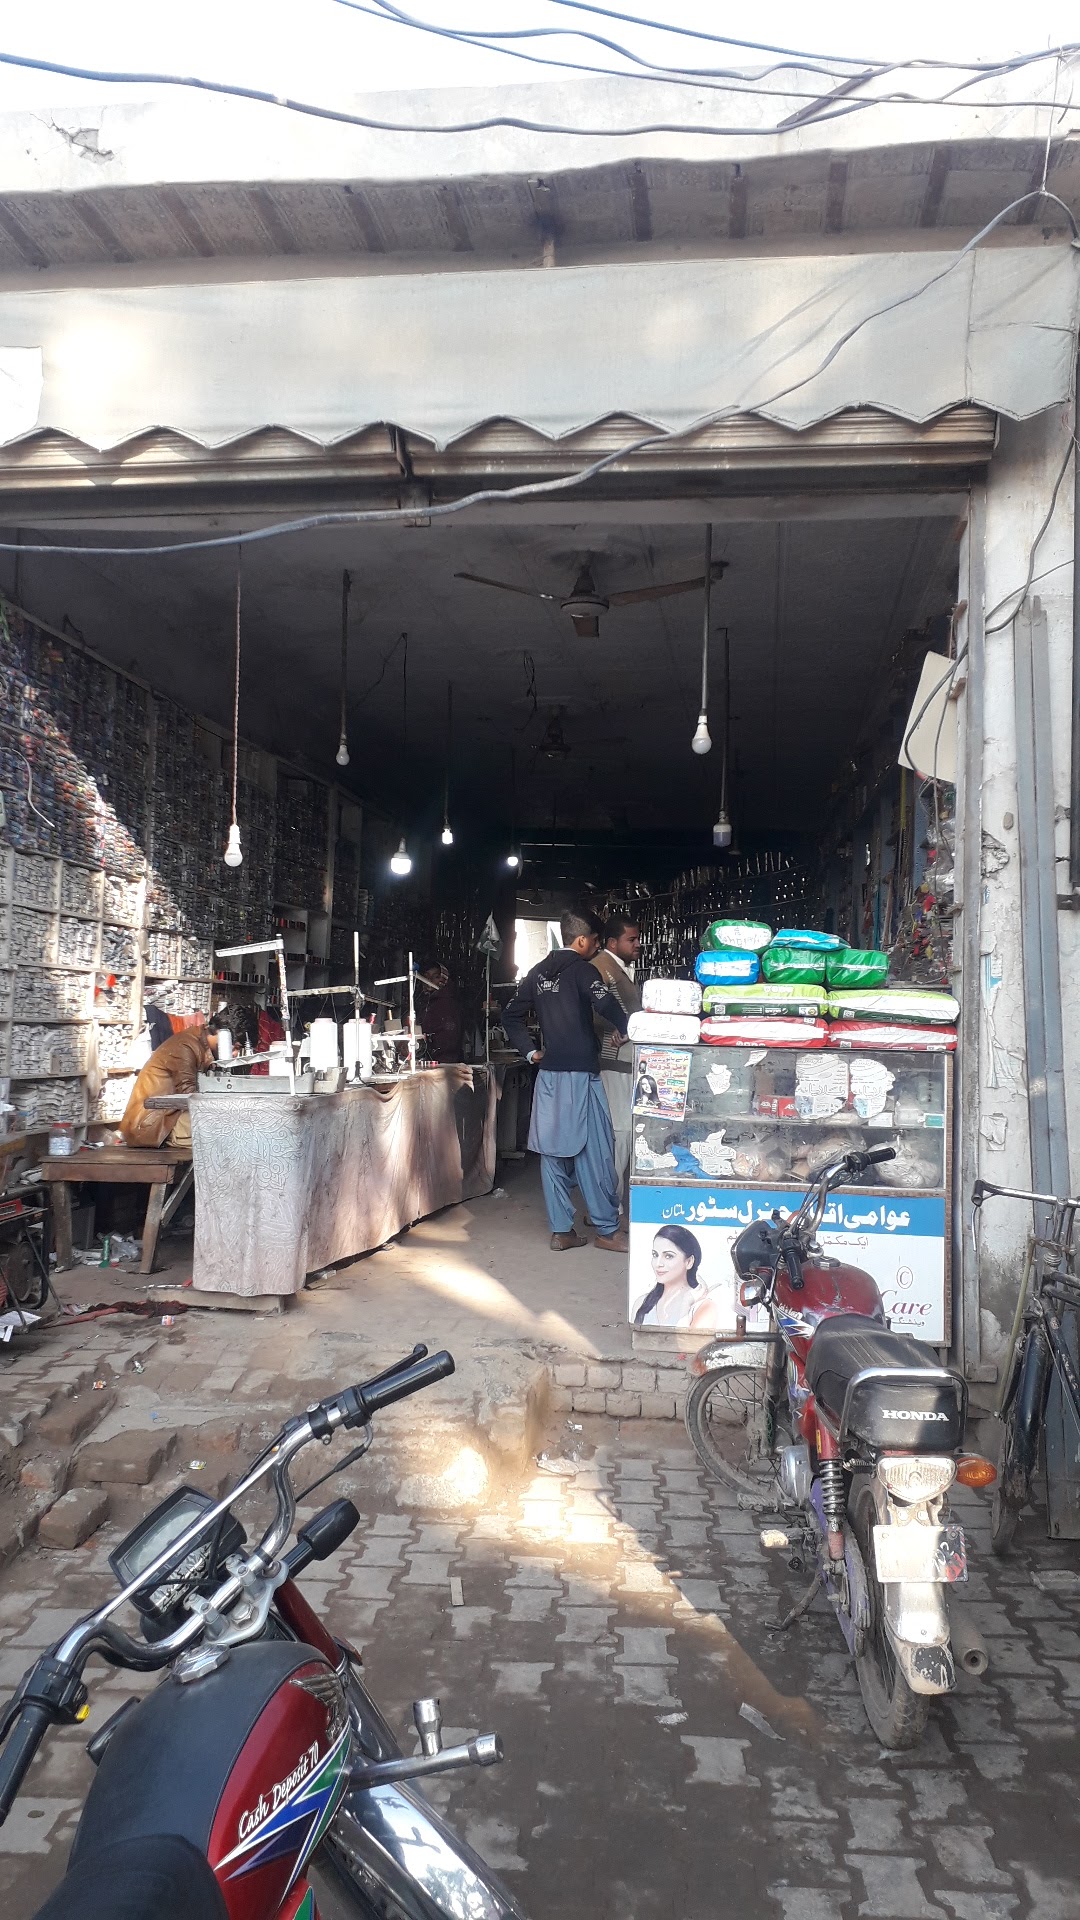 Awami jenral store